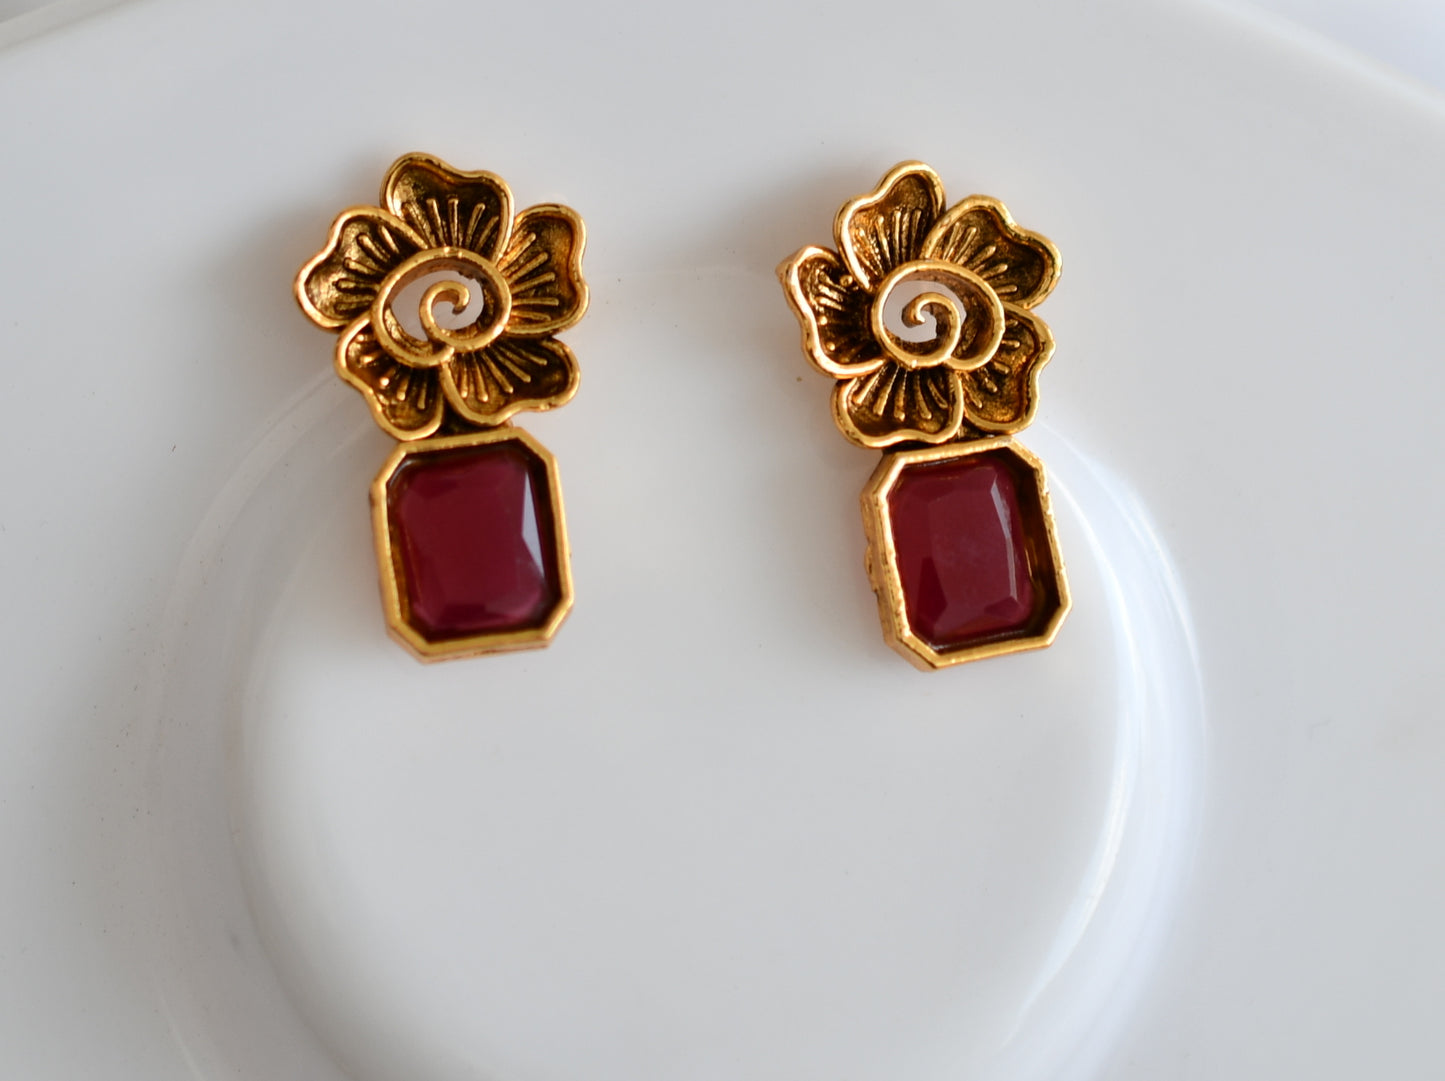 Antique gold flower ruby-green block stone necklace set dj-38682